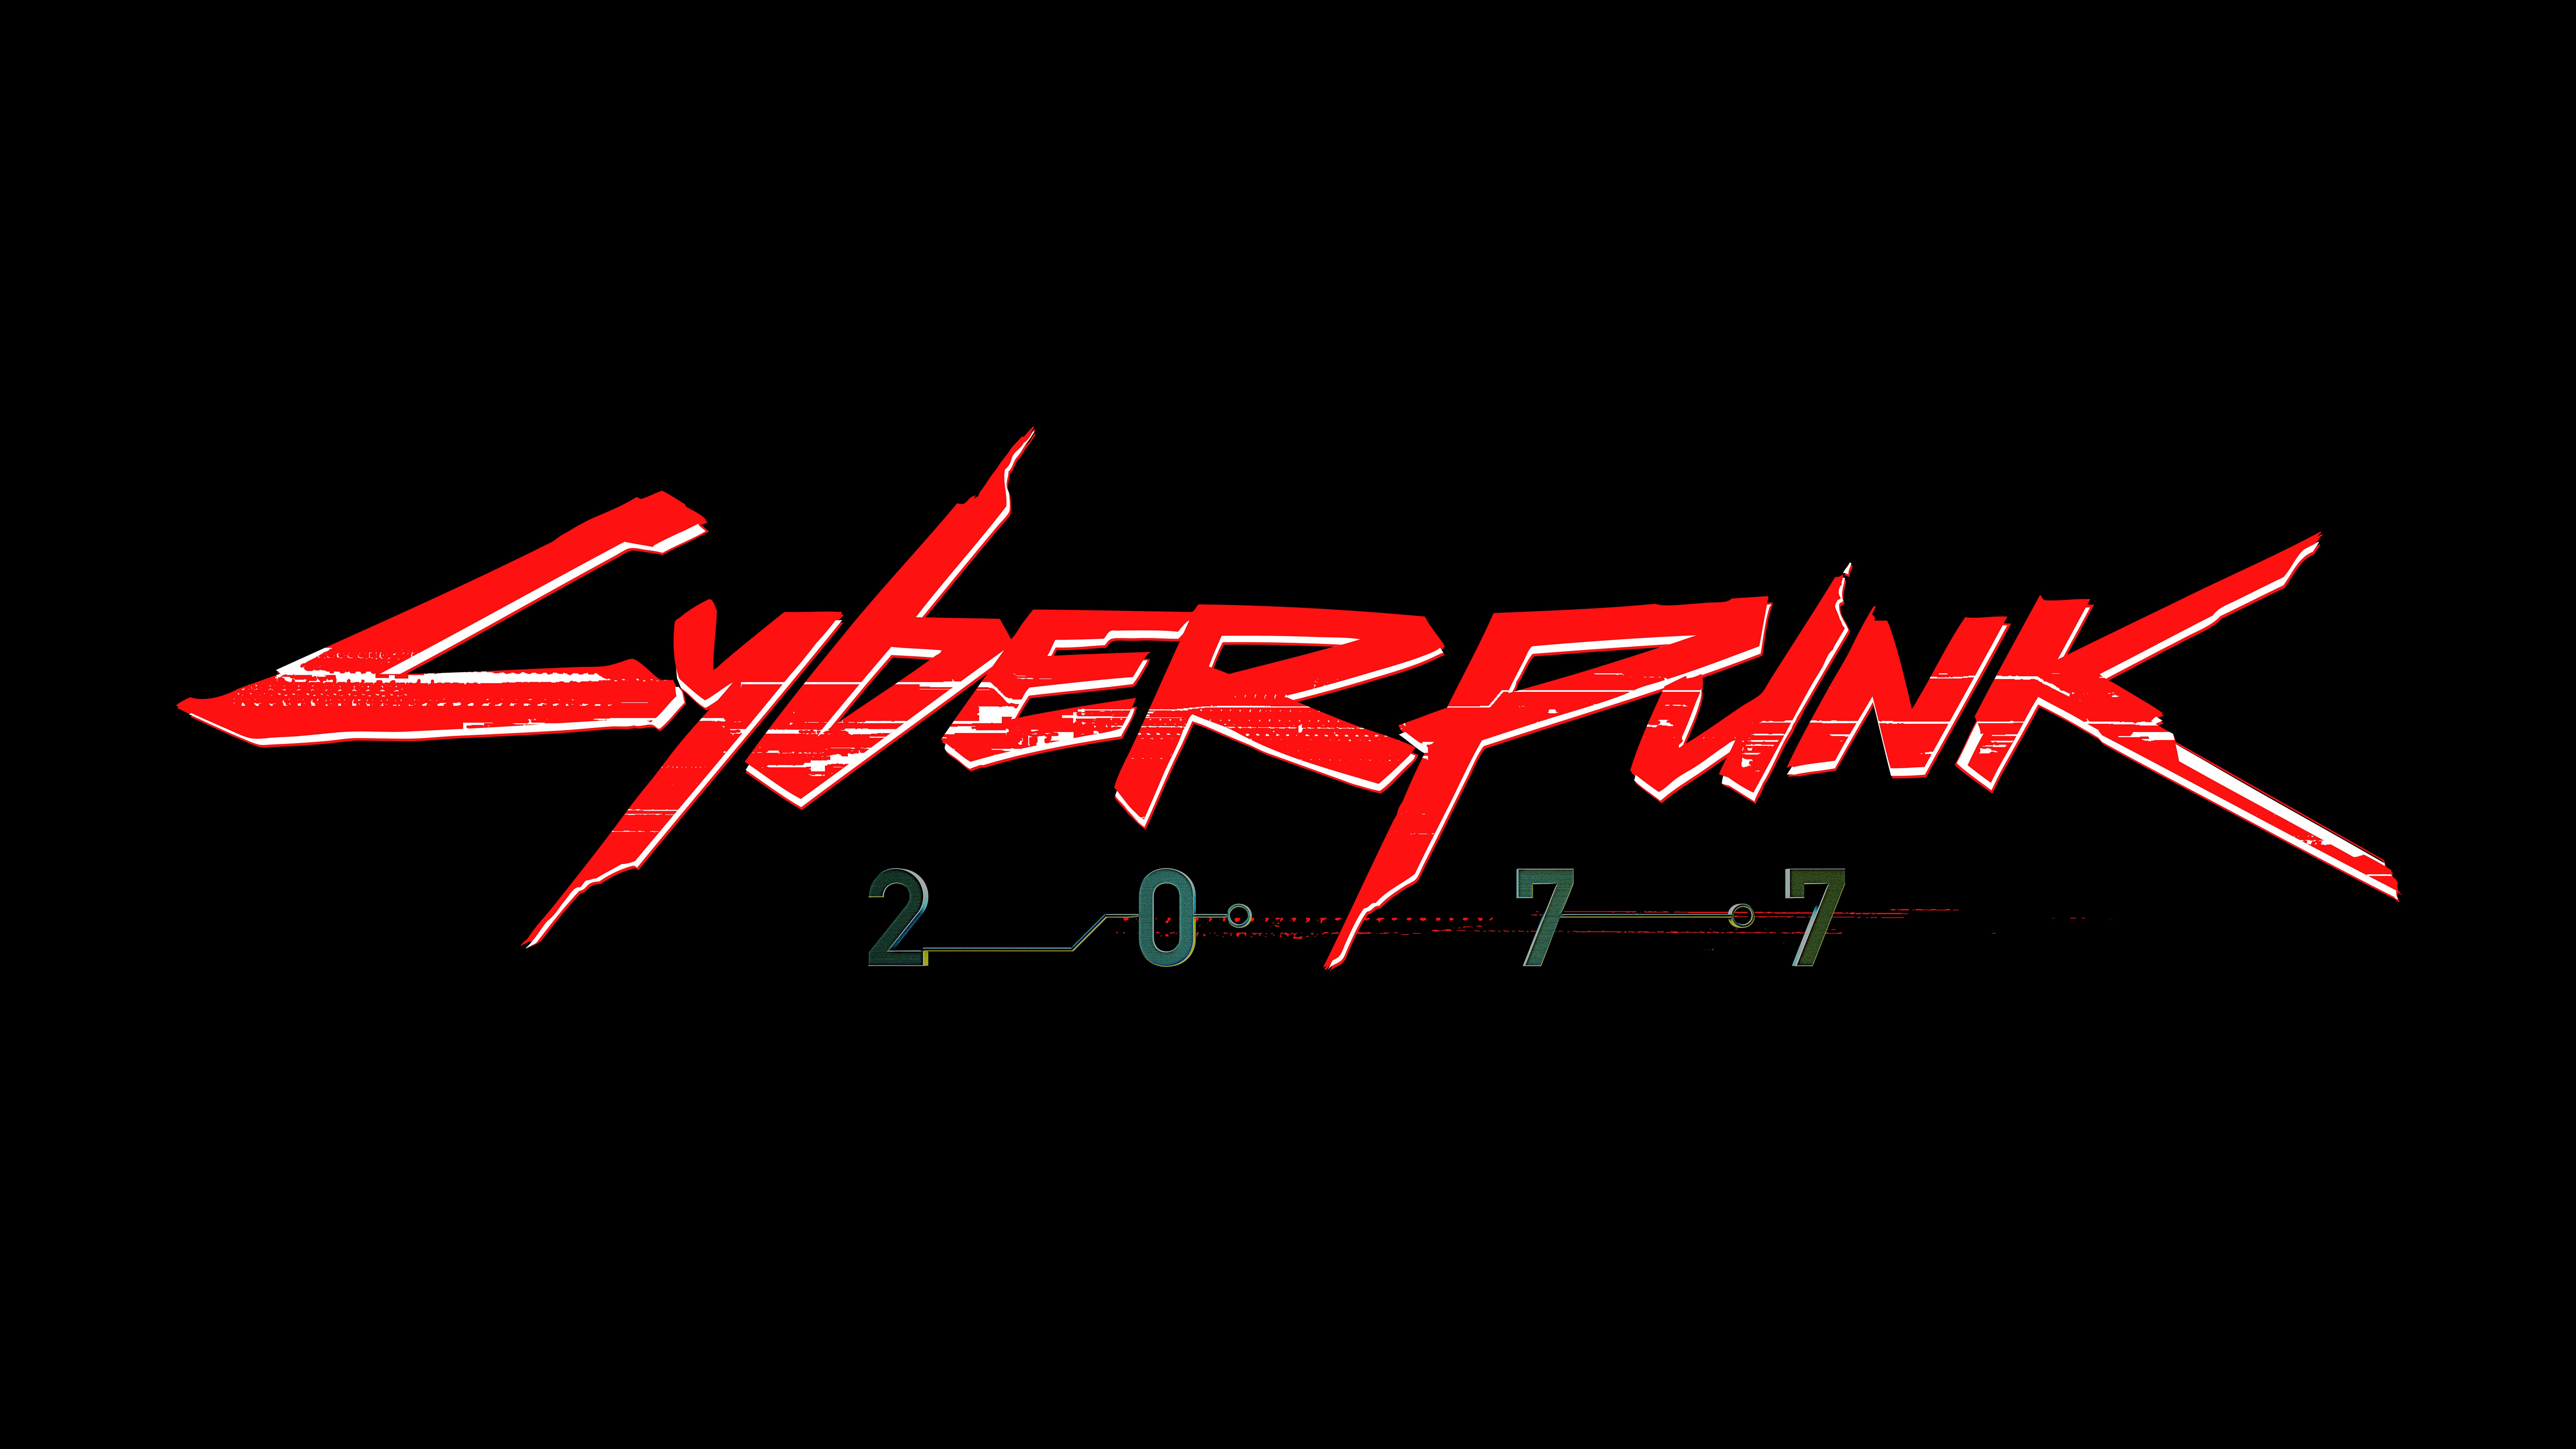 General 7680x4320 cyberpunk Cyberpunk 2077 digital art artwork simple background black background logo typography video games PC gaming